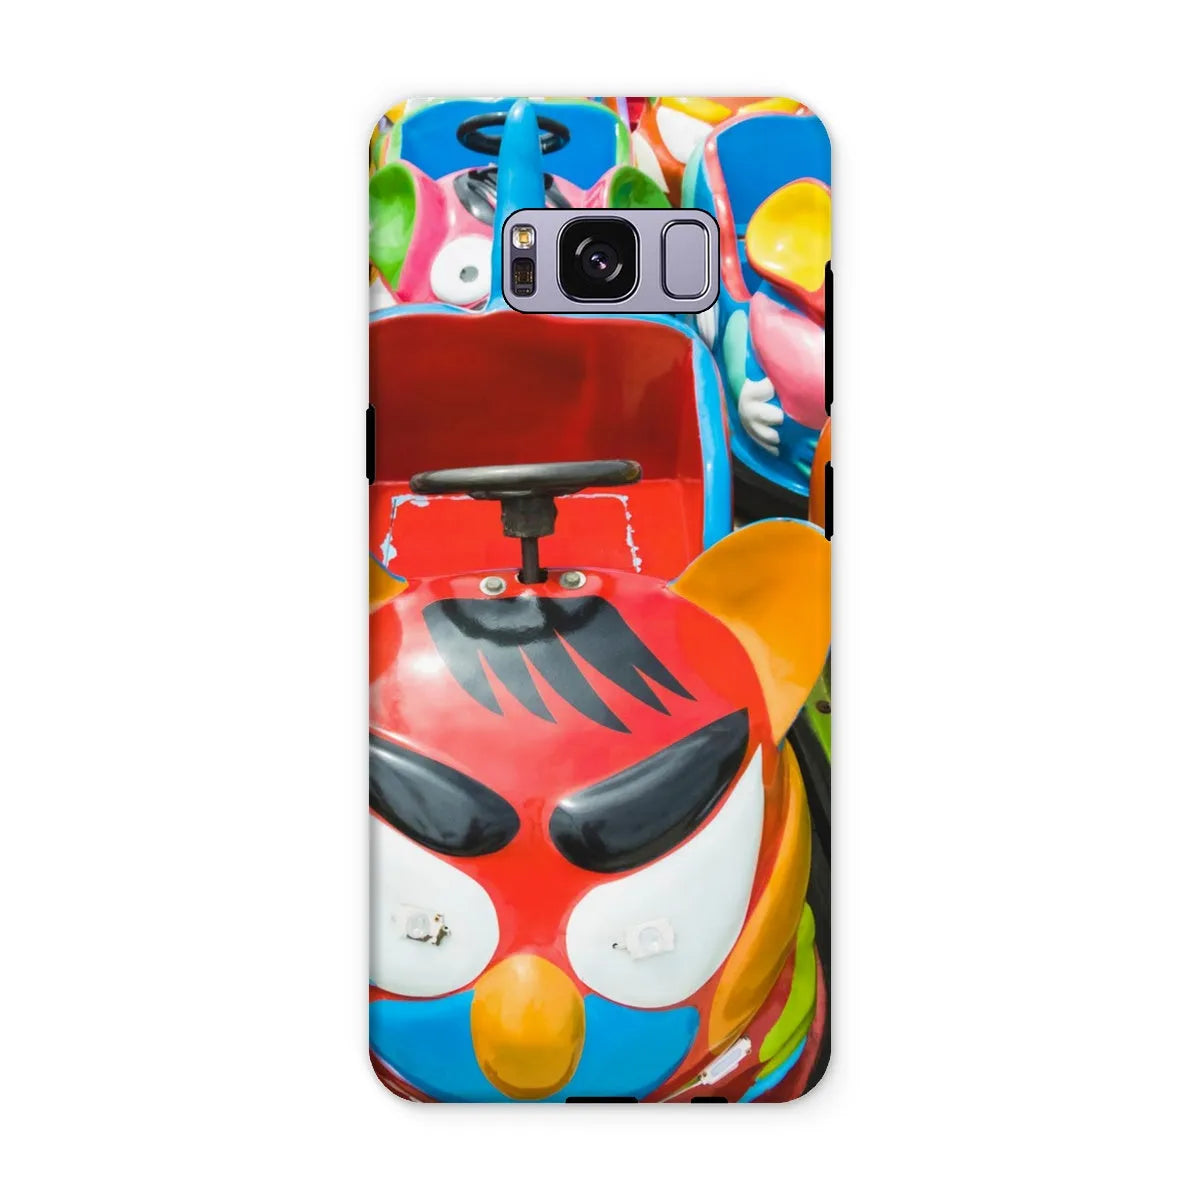 Rat Pack Tough Phone Case - Samsung Galaxy S8 Plus / Matte - Mobile Phone Cases - Aesthetic Art